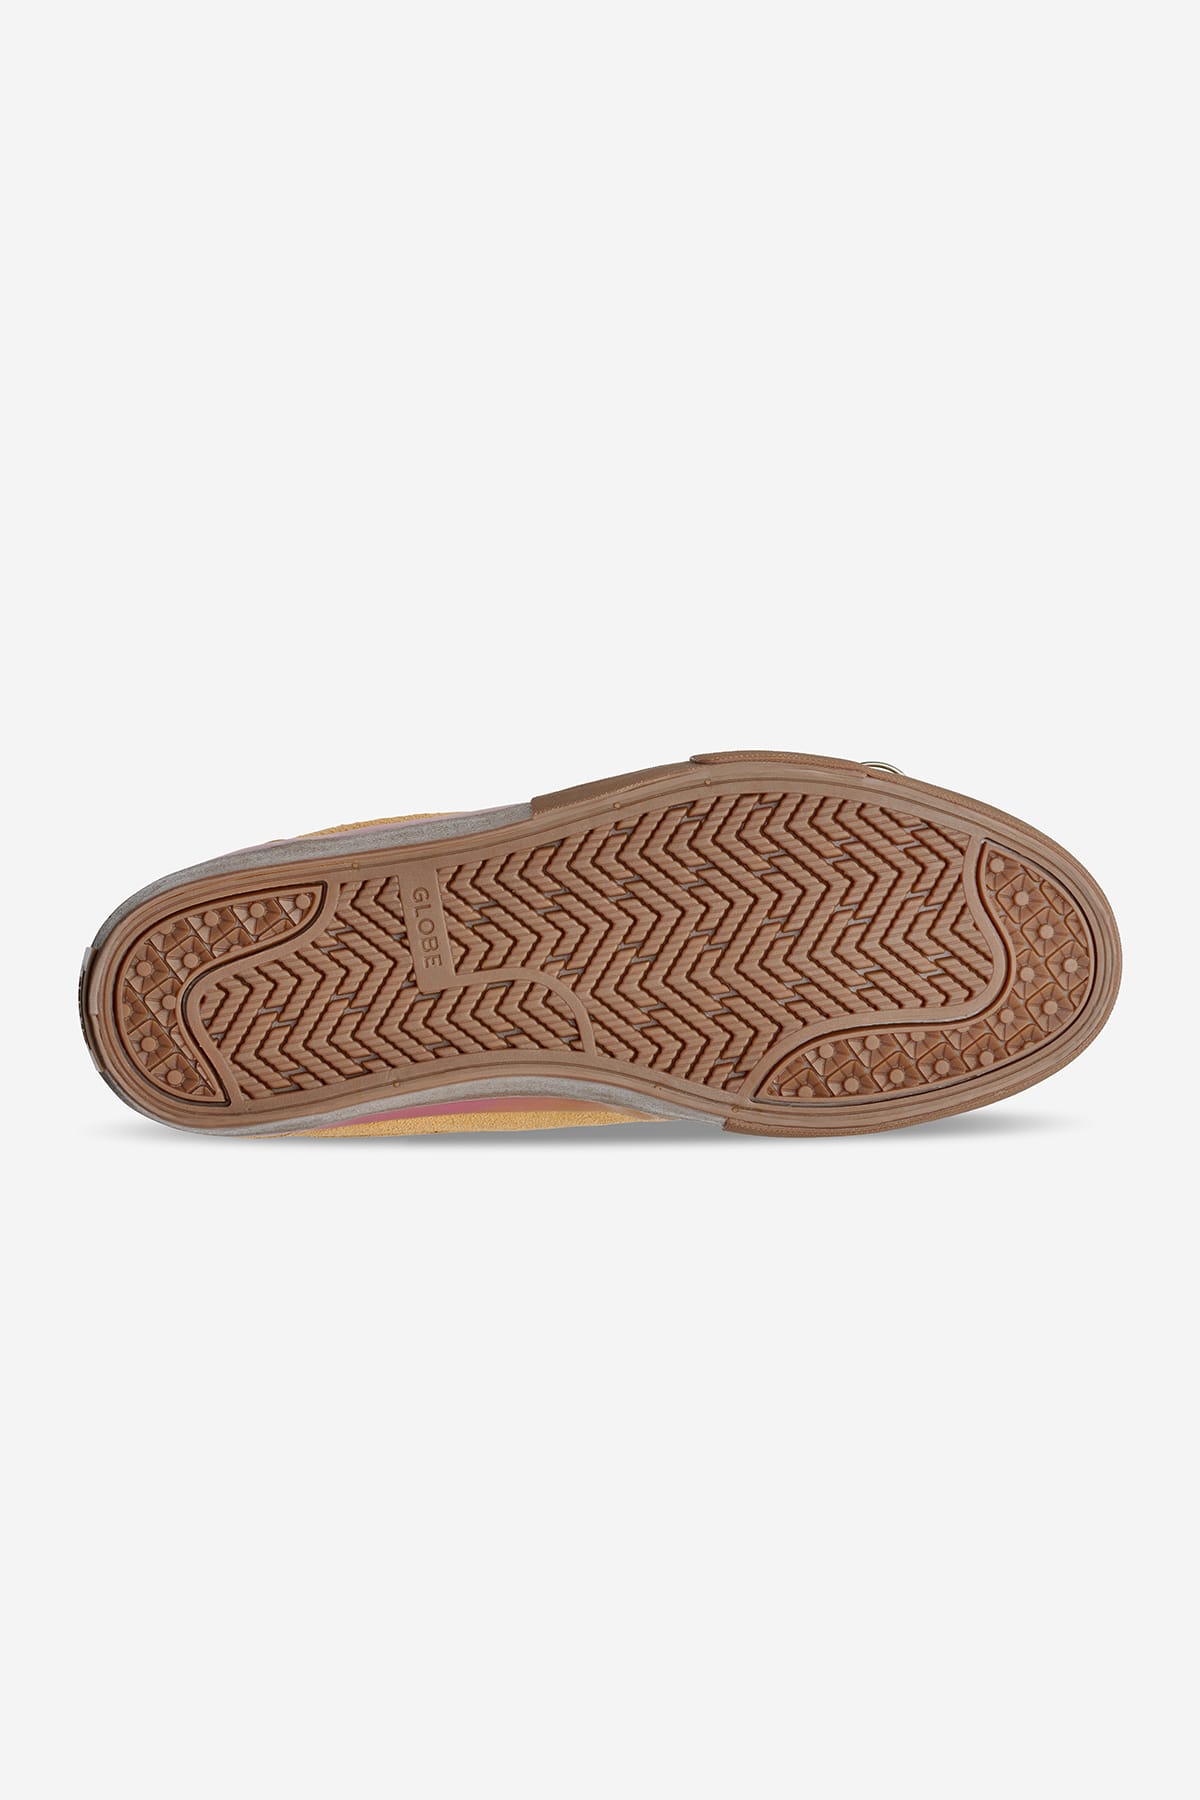 Globe - Mahalo Plus - Curry/Gum - skateboard Schuhe